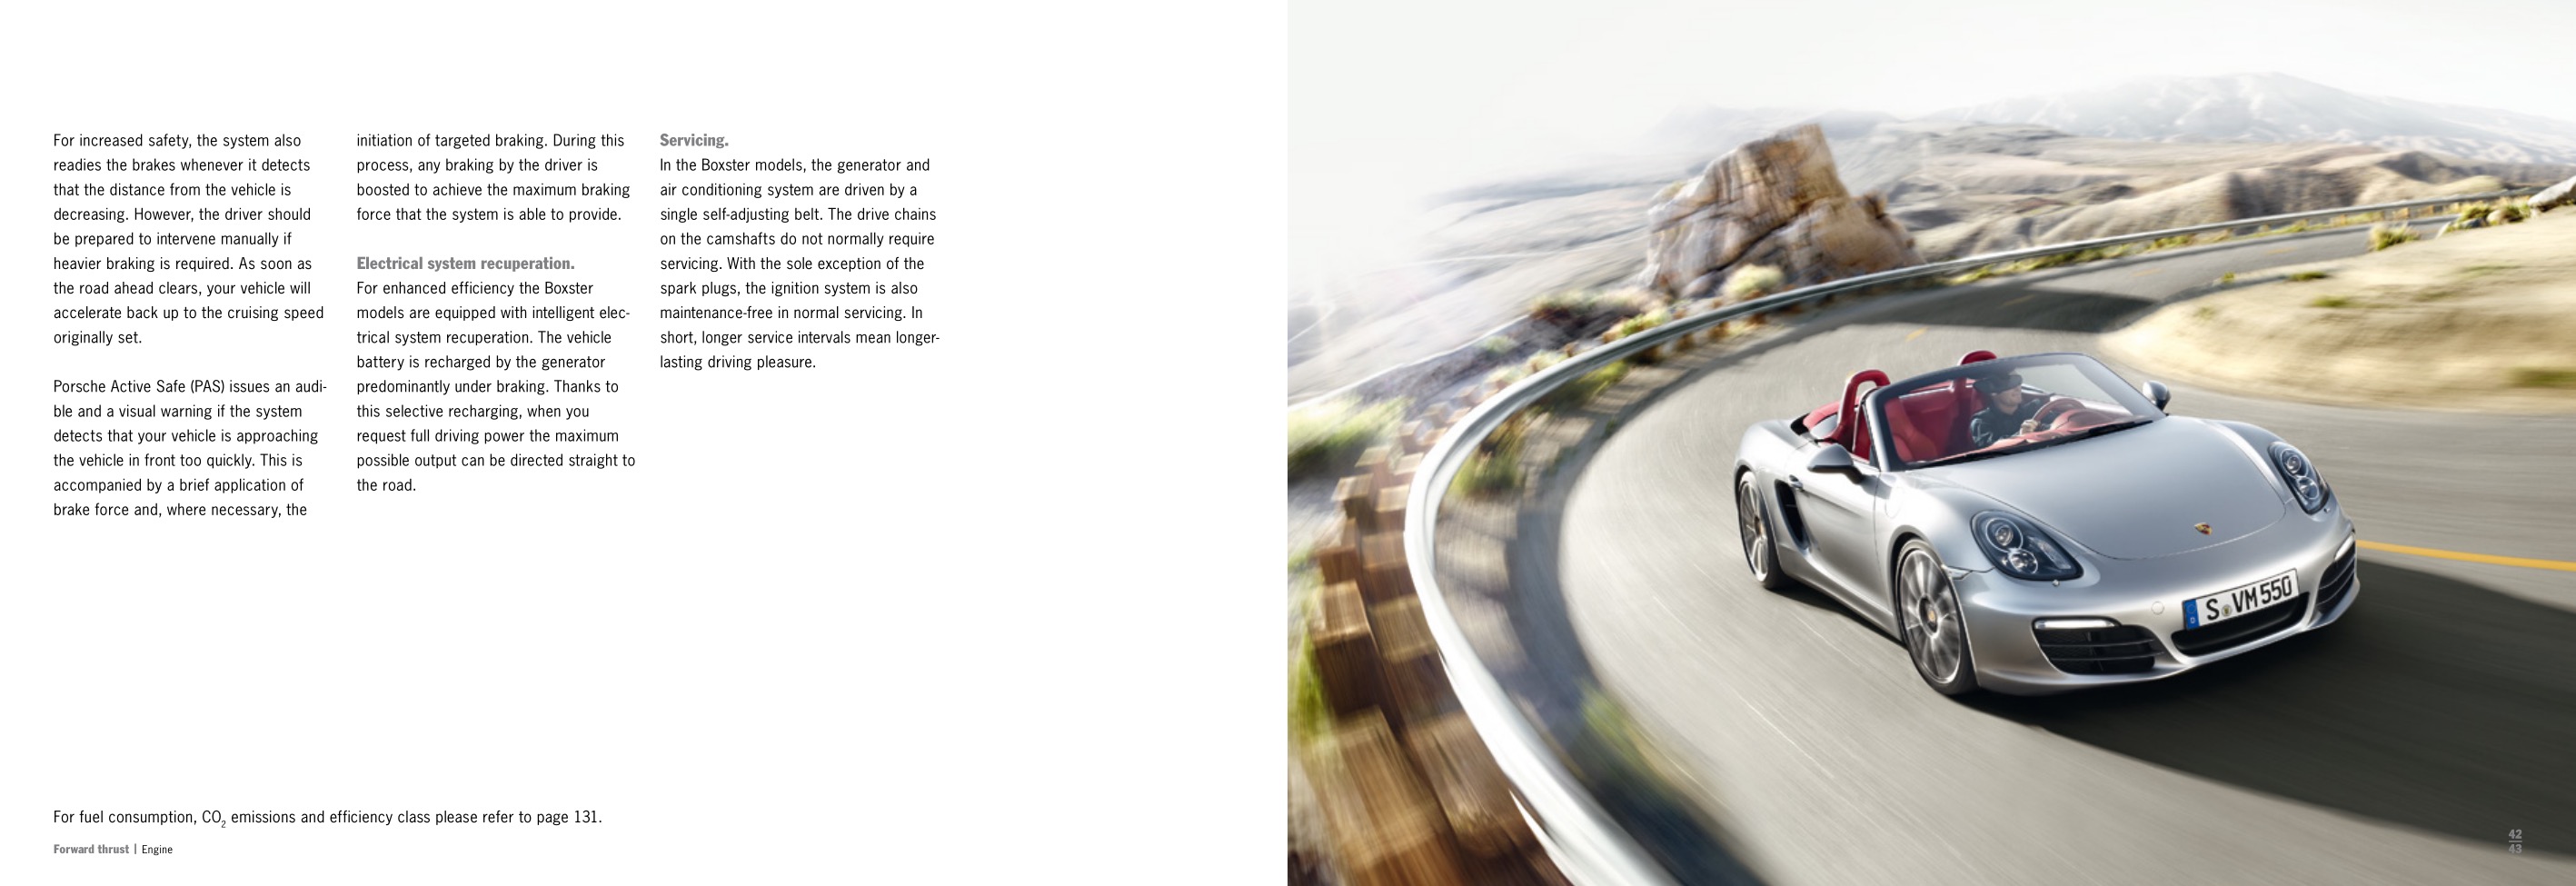 2013 Porsche Boxster Brochure Page 5